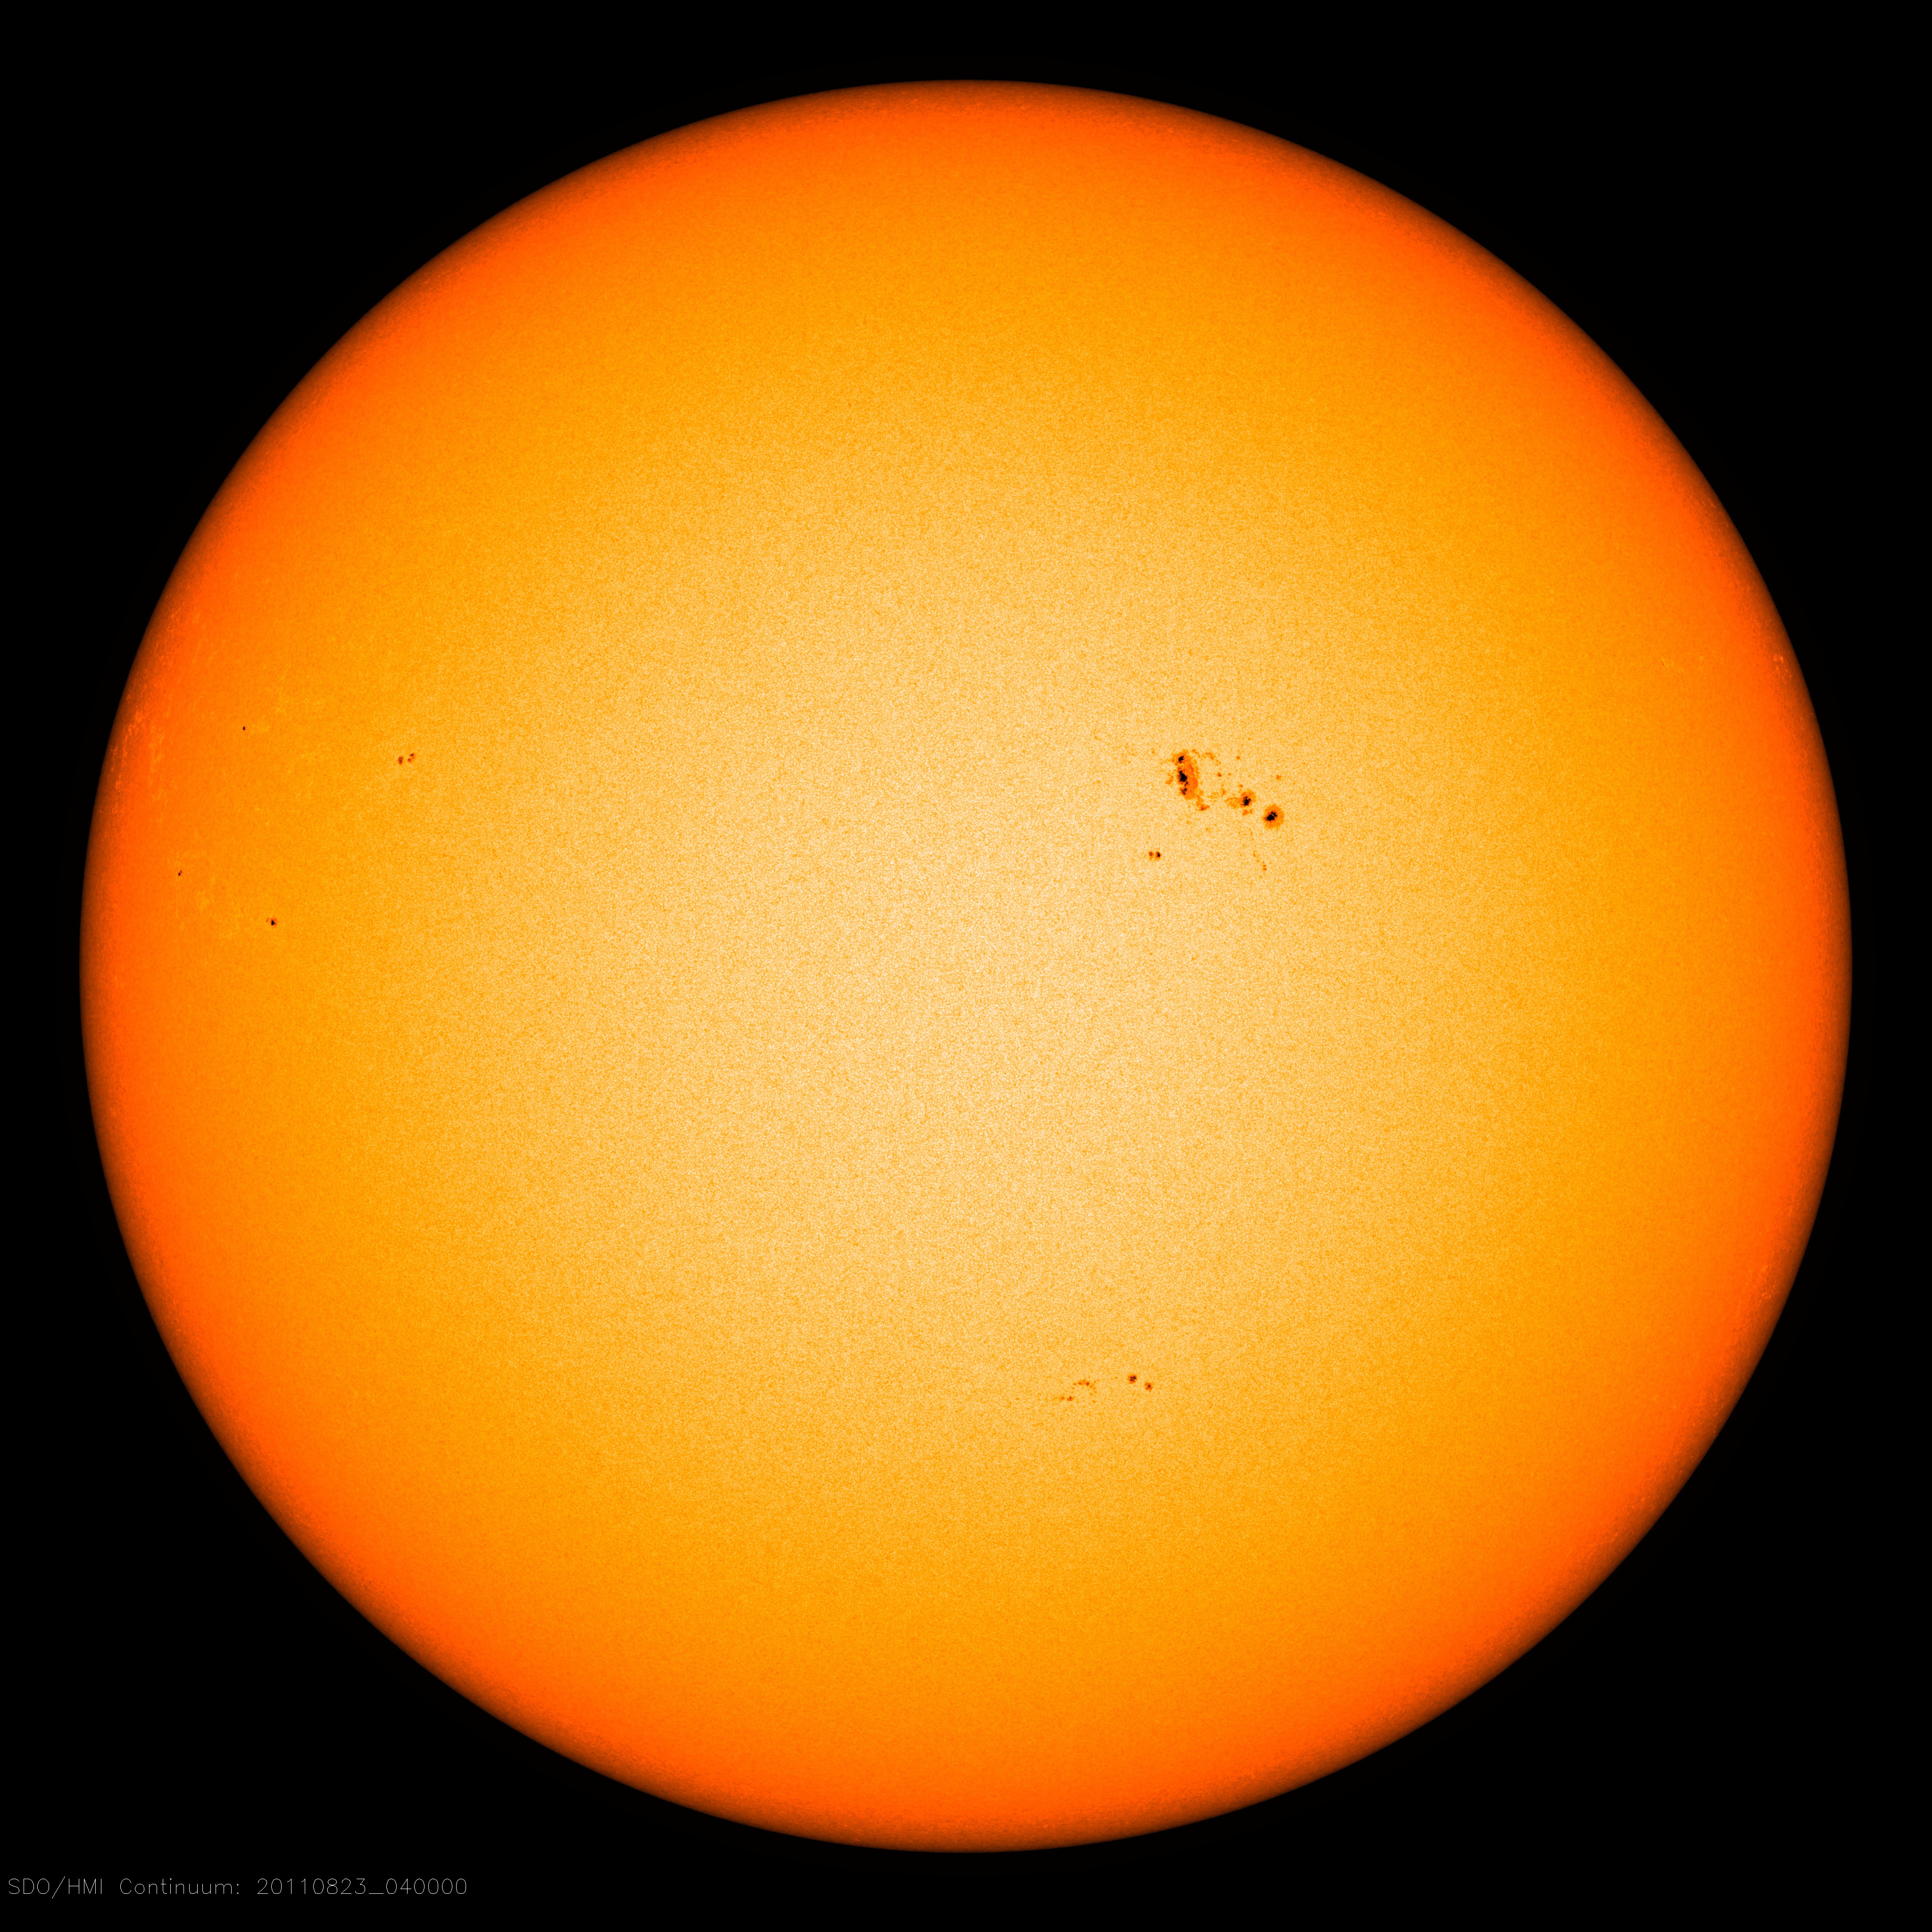 SDO/HMI movie of sunspots evolving across the solar disk.